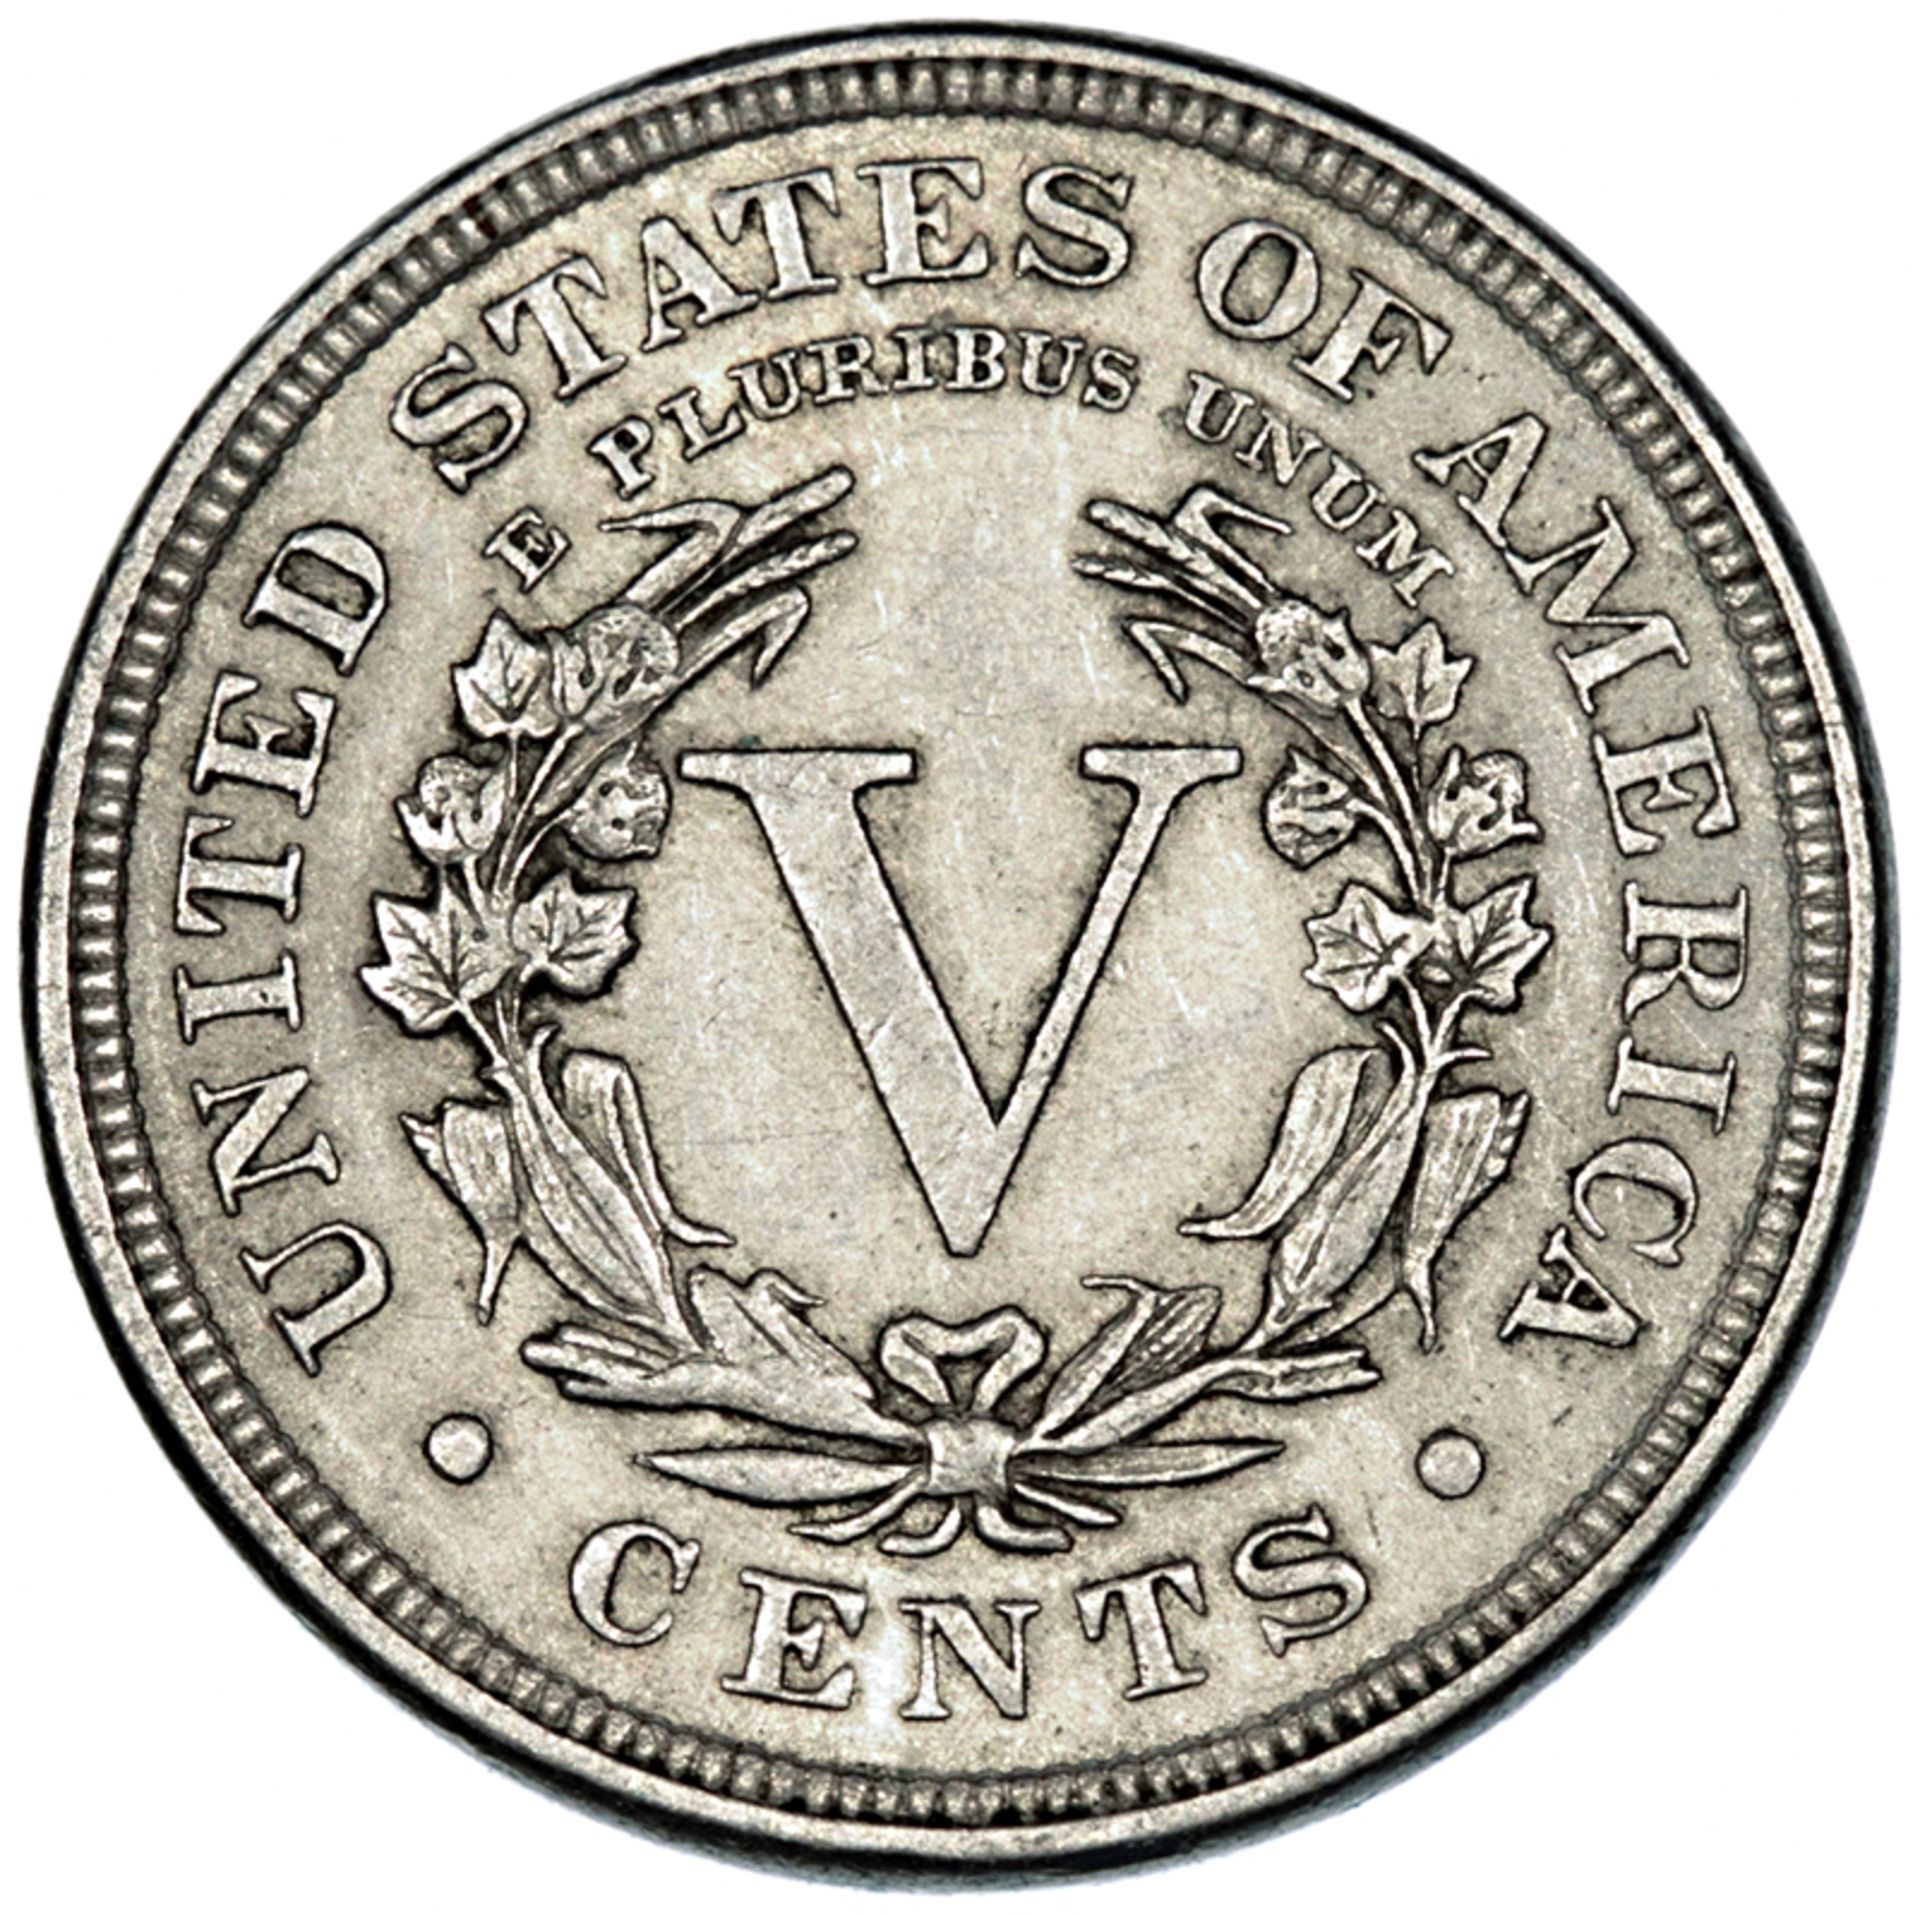 USA - Liberty Nickel 1891, - Image 2 of 2